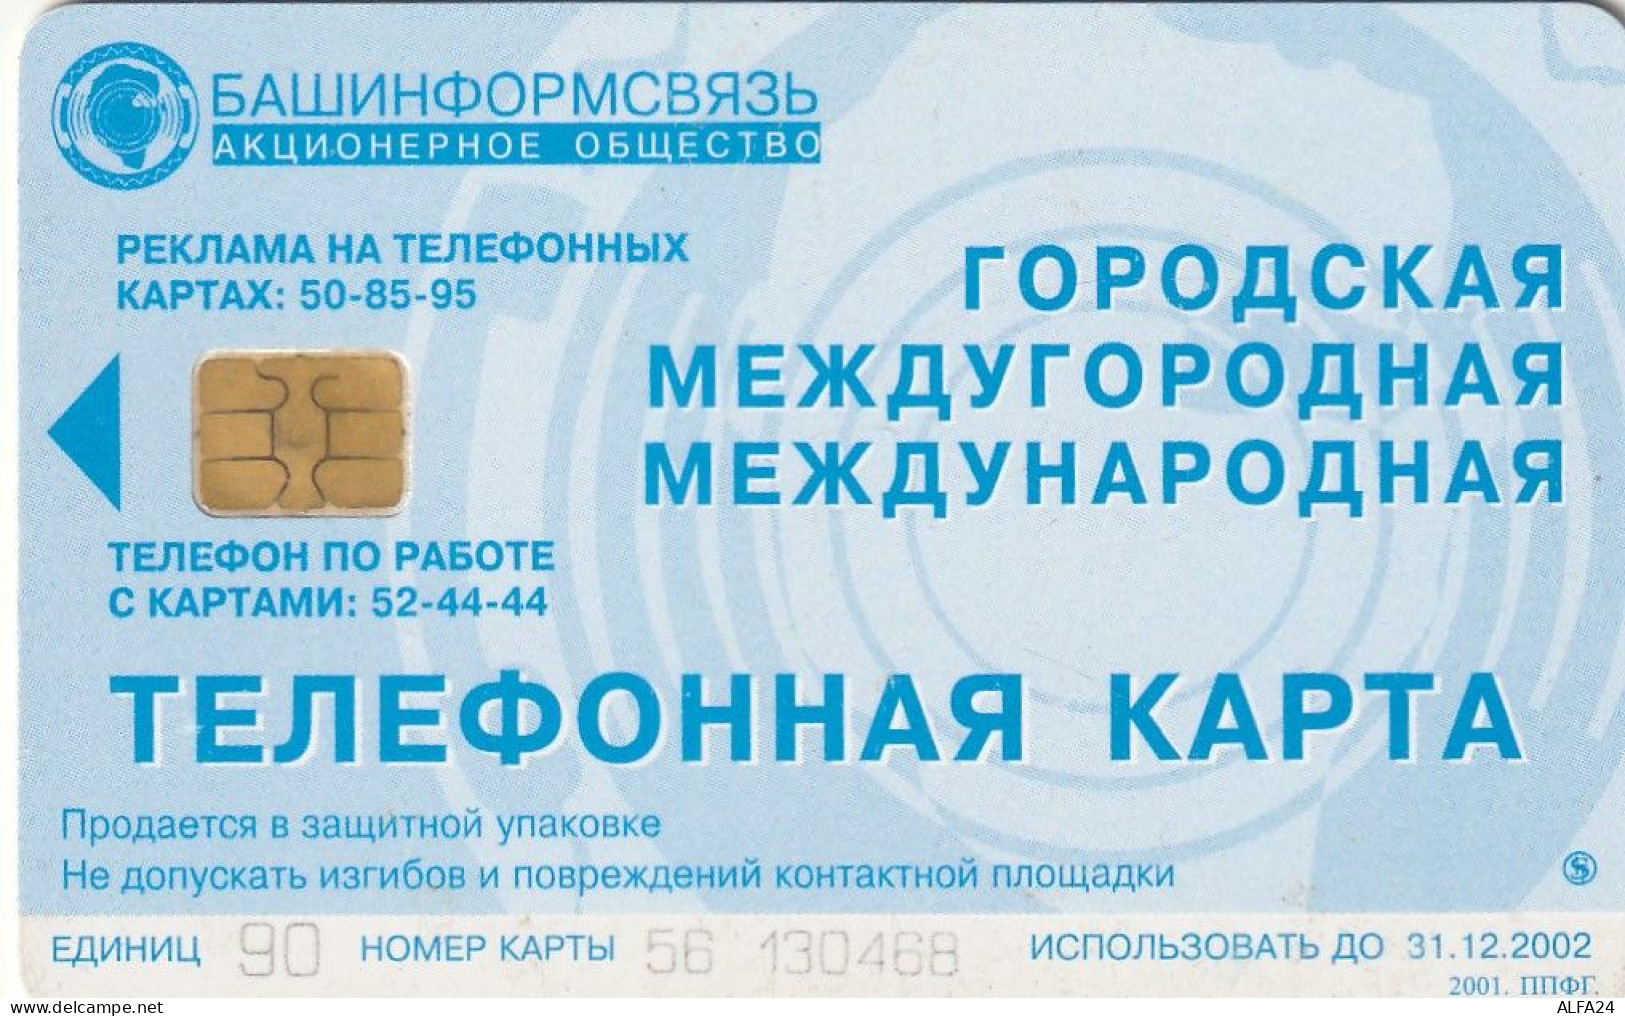 PHONE CARD RUSSIA Bashinformsvyaz - Ufa (E9.2.6 - Rusia